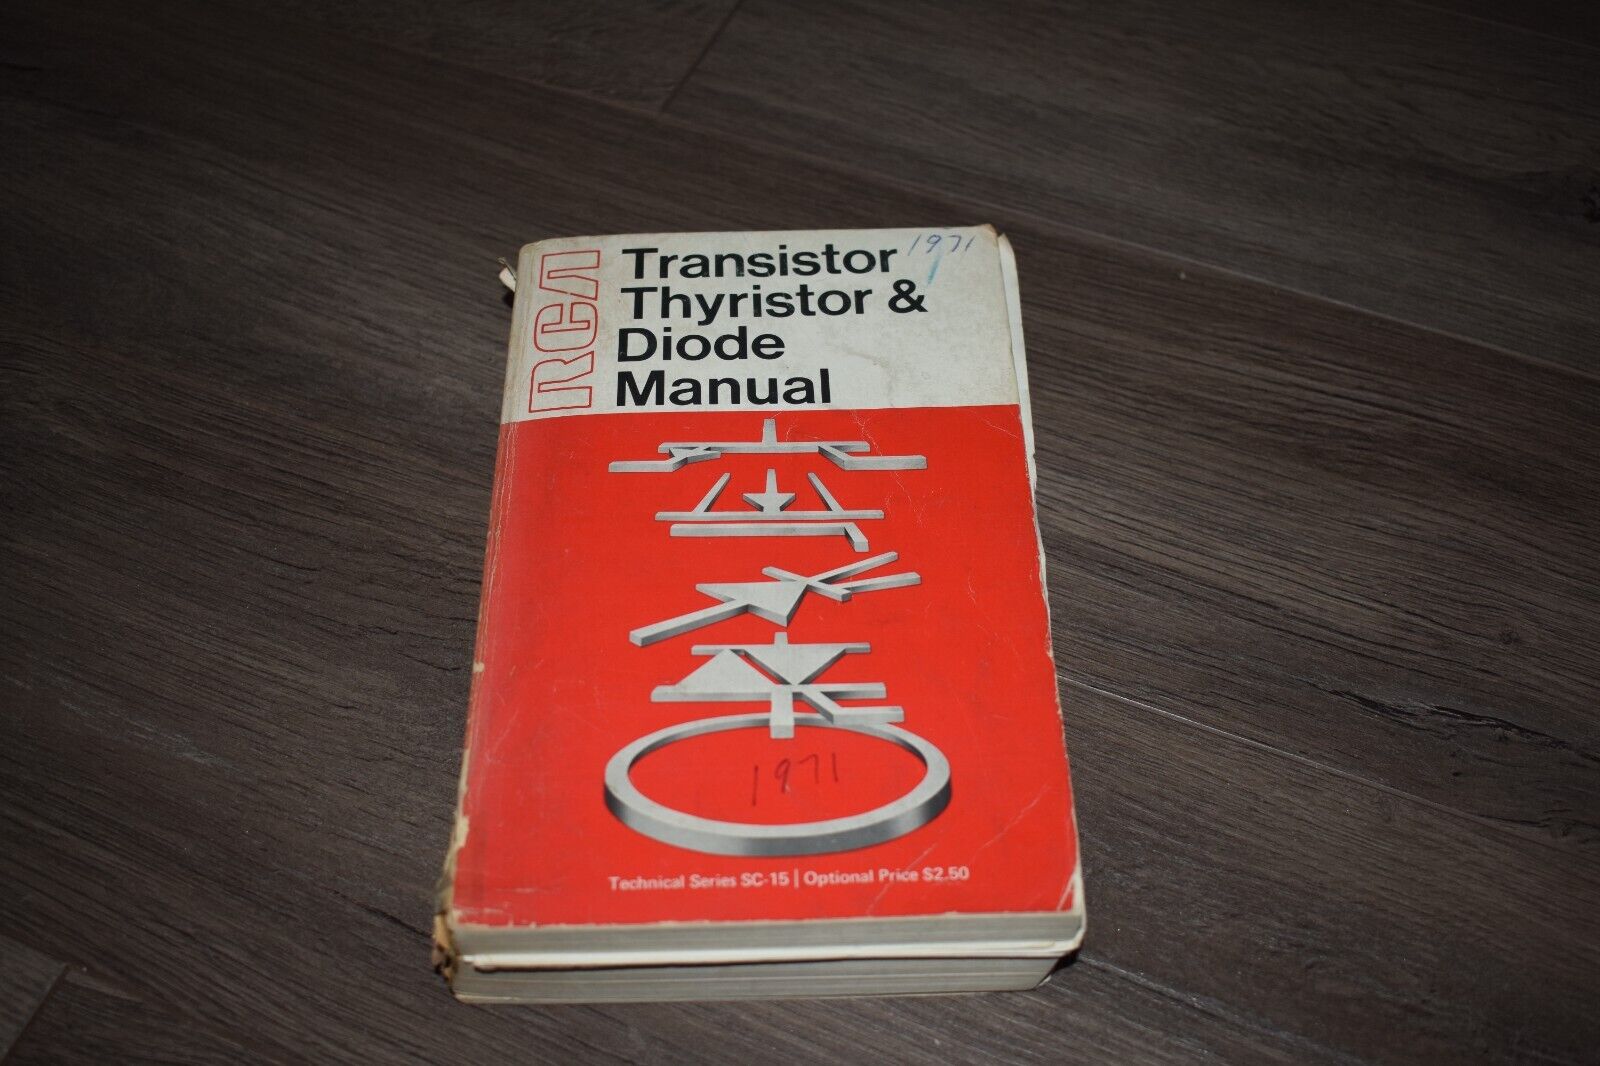 RCA Transistor, Thyristor & Diode Manual 1971 book SC-15